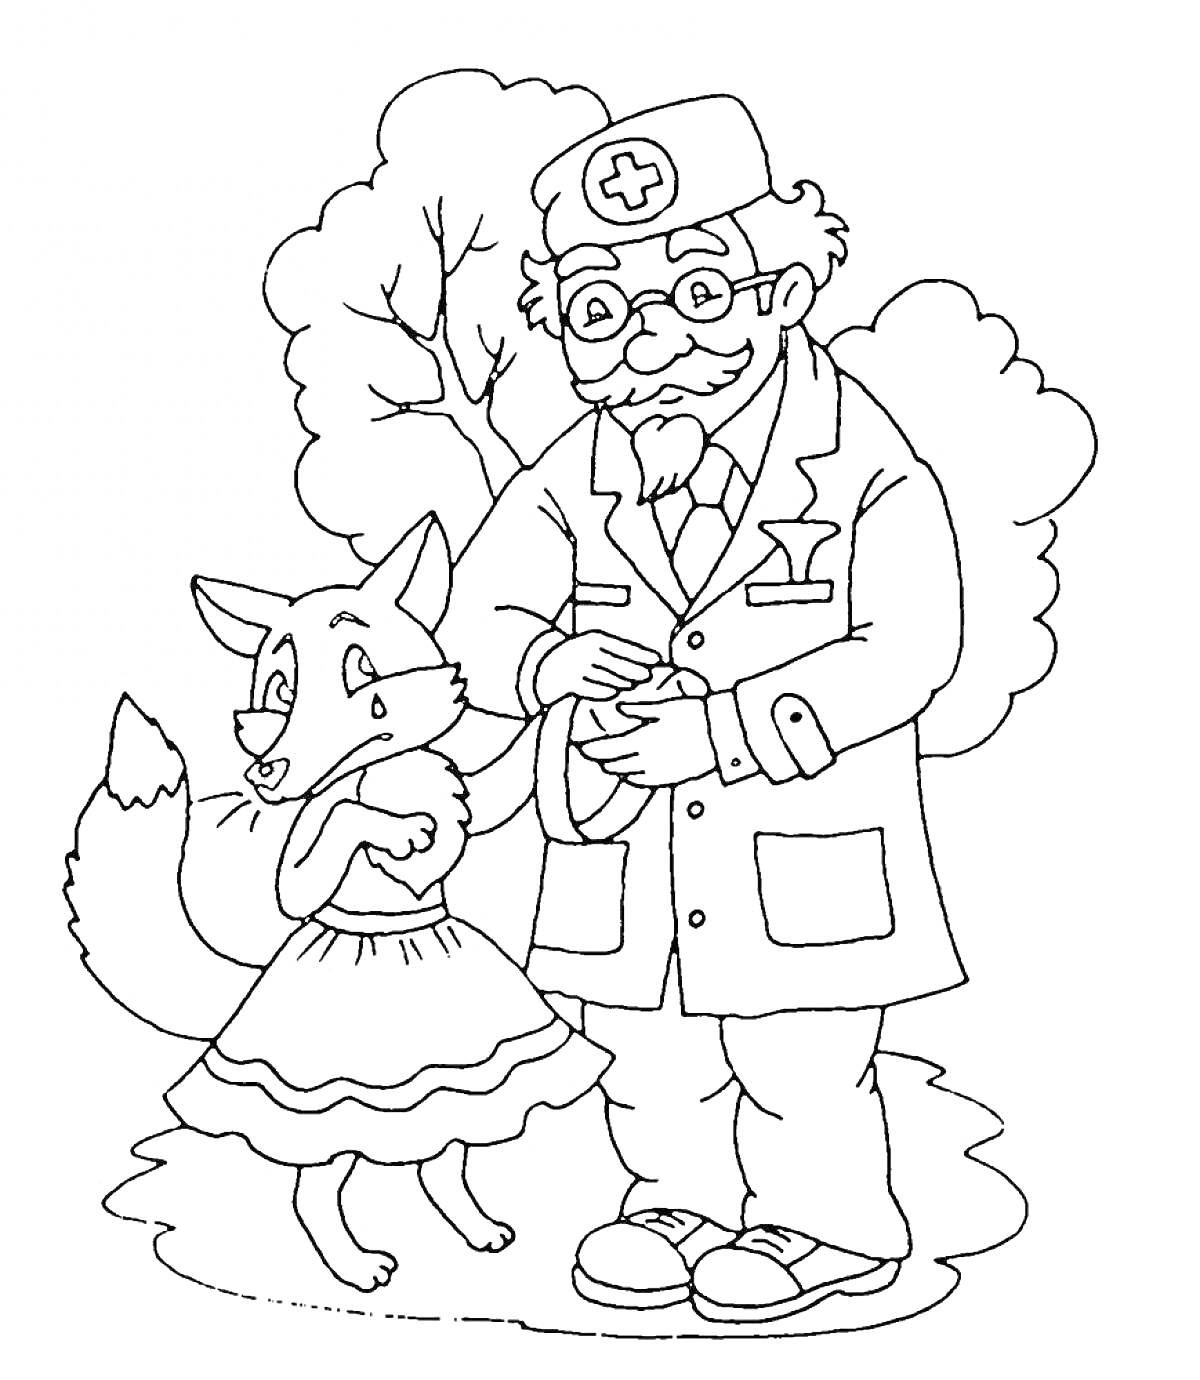 Доктор Айболит и лиса в платье на фоне дерева